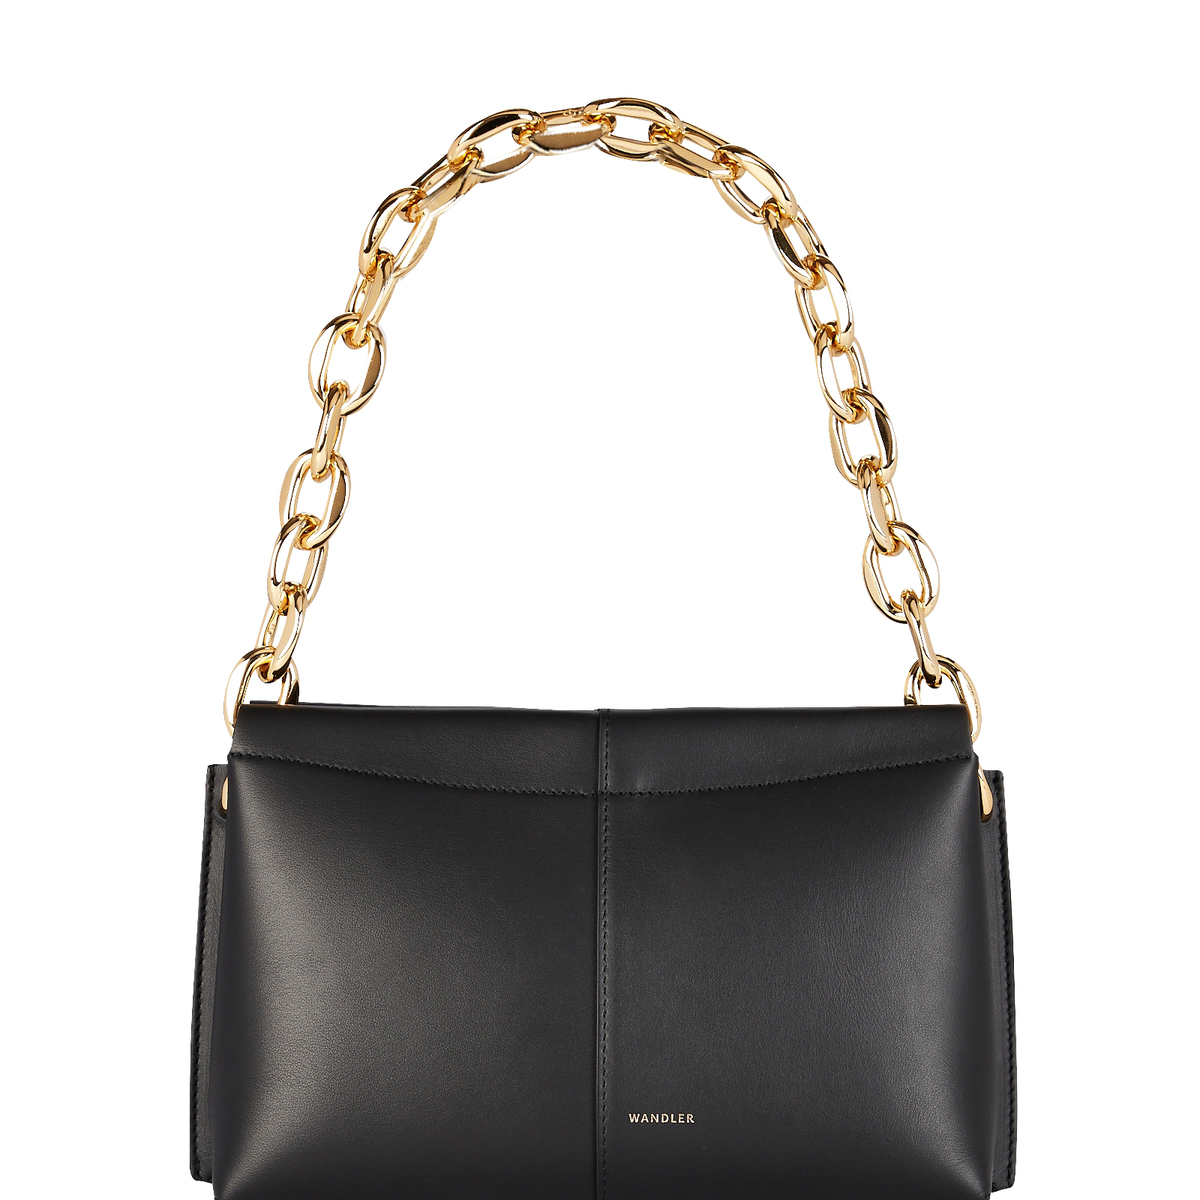 Wandler Carly Mini Leather Chain Bag | INTERMIX®